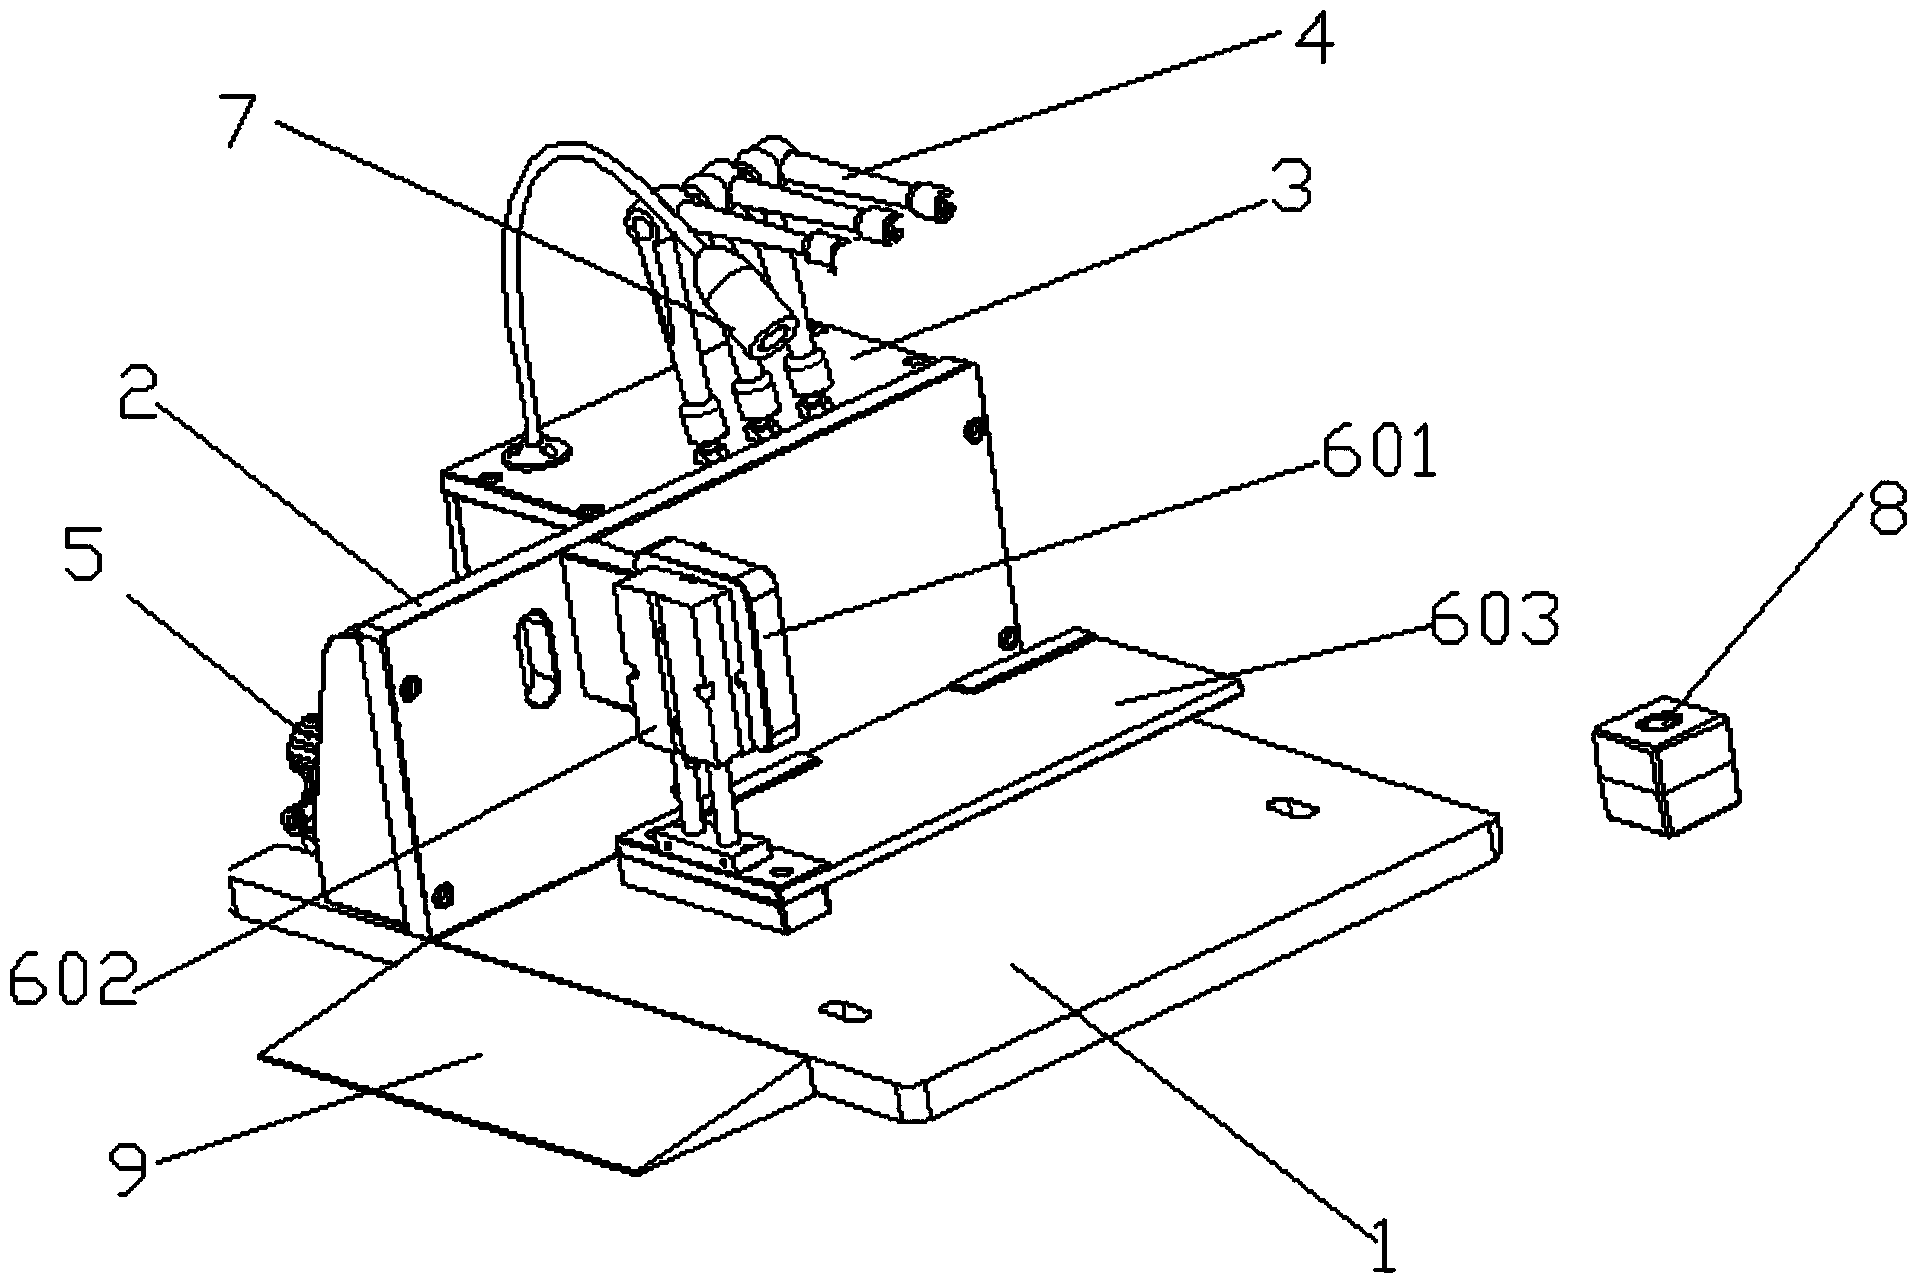 Semi-automatic dispensing pressing machine